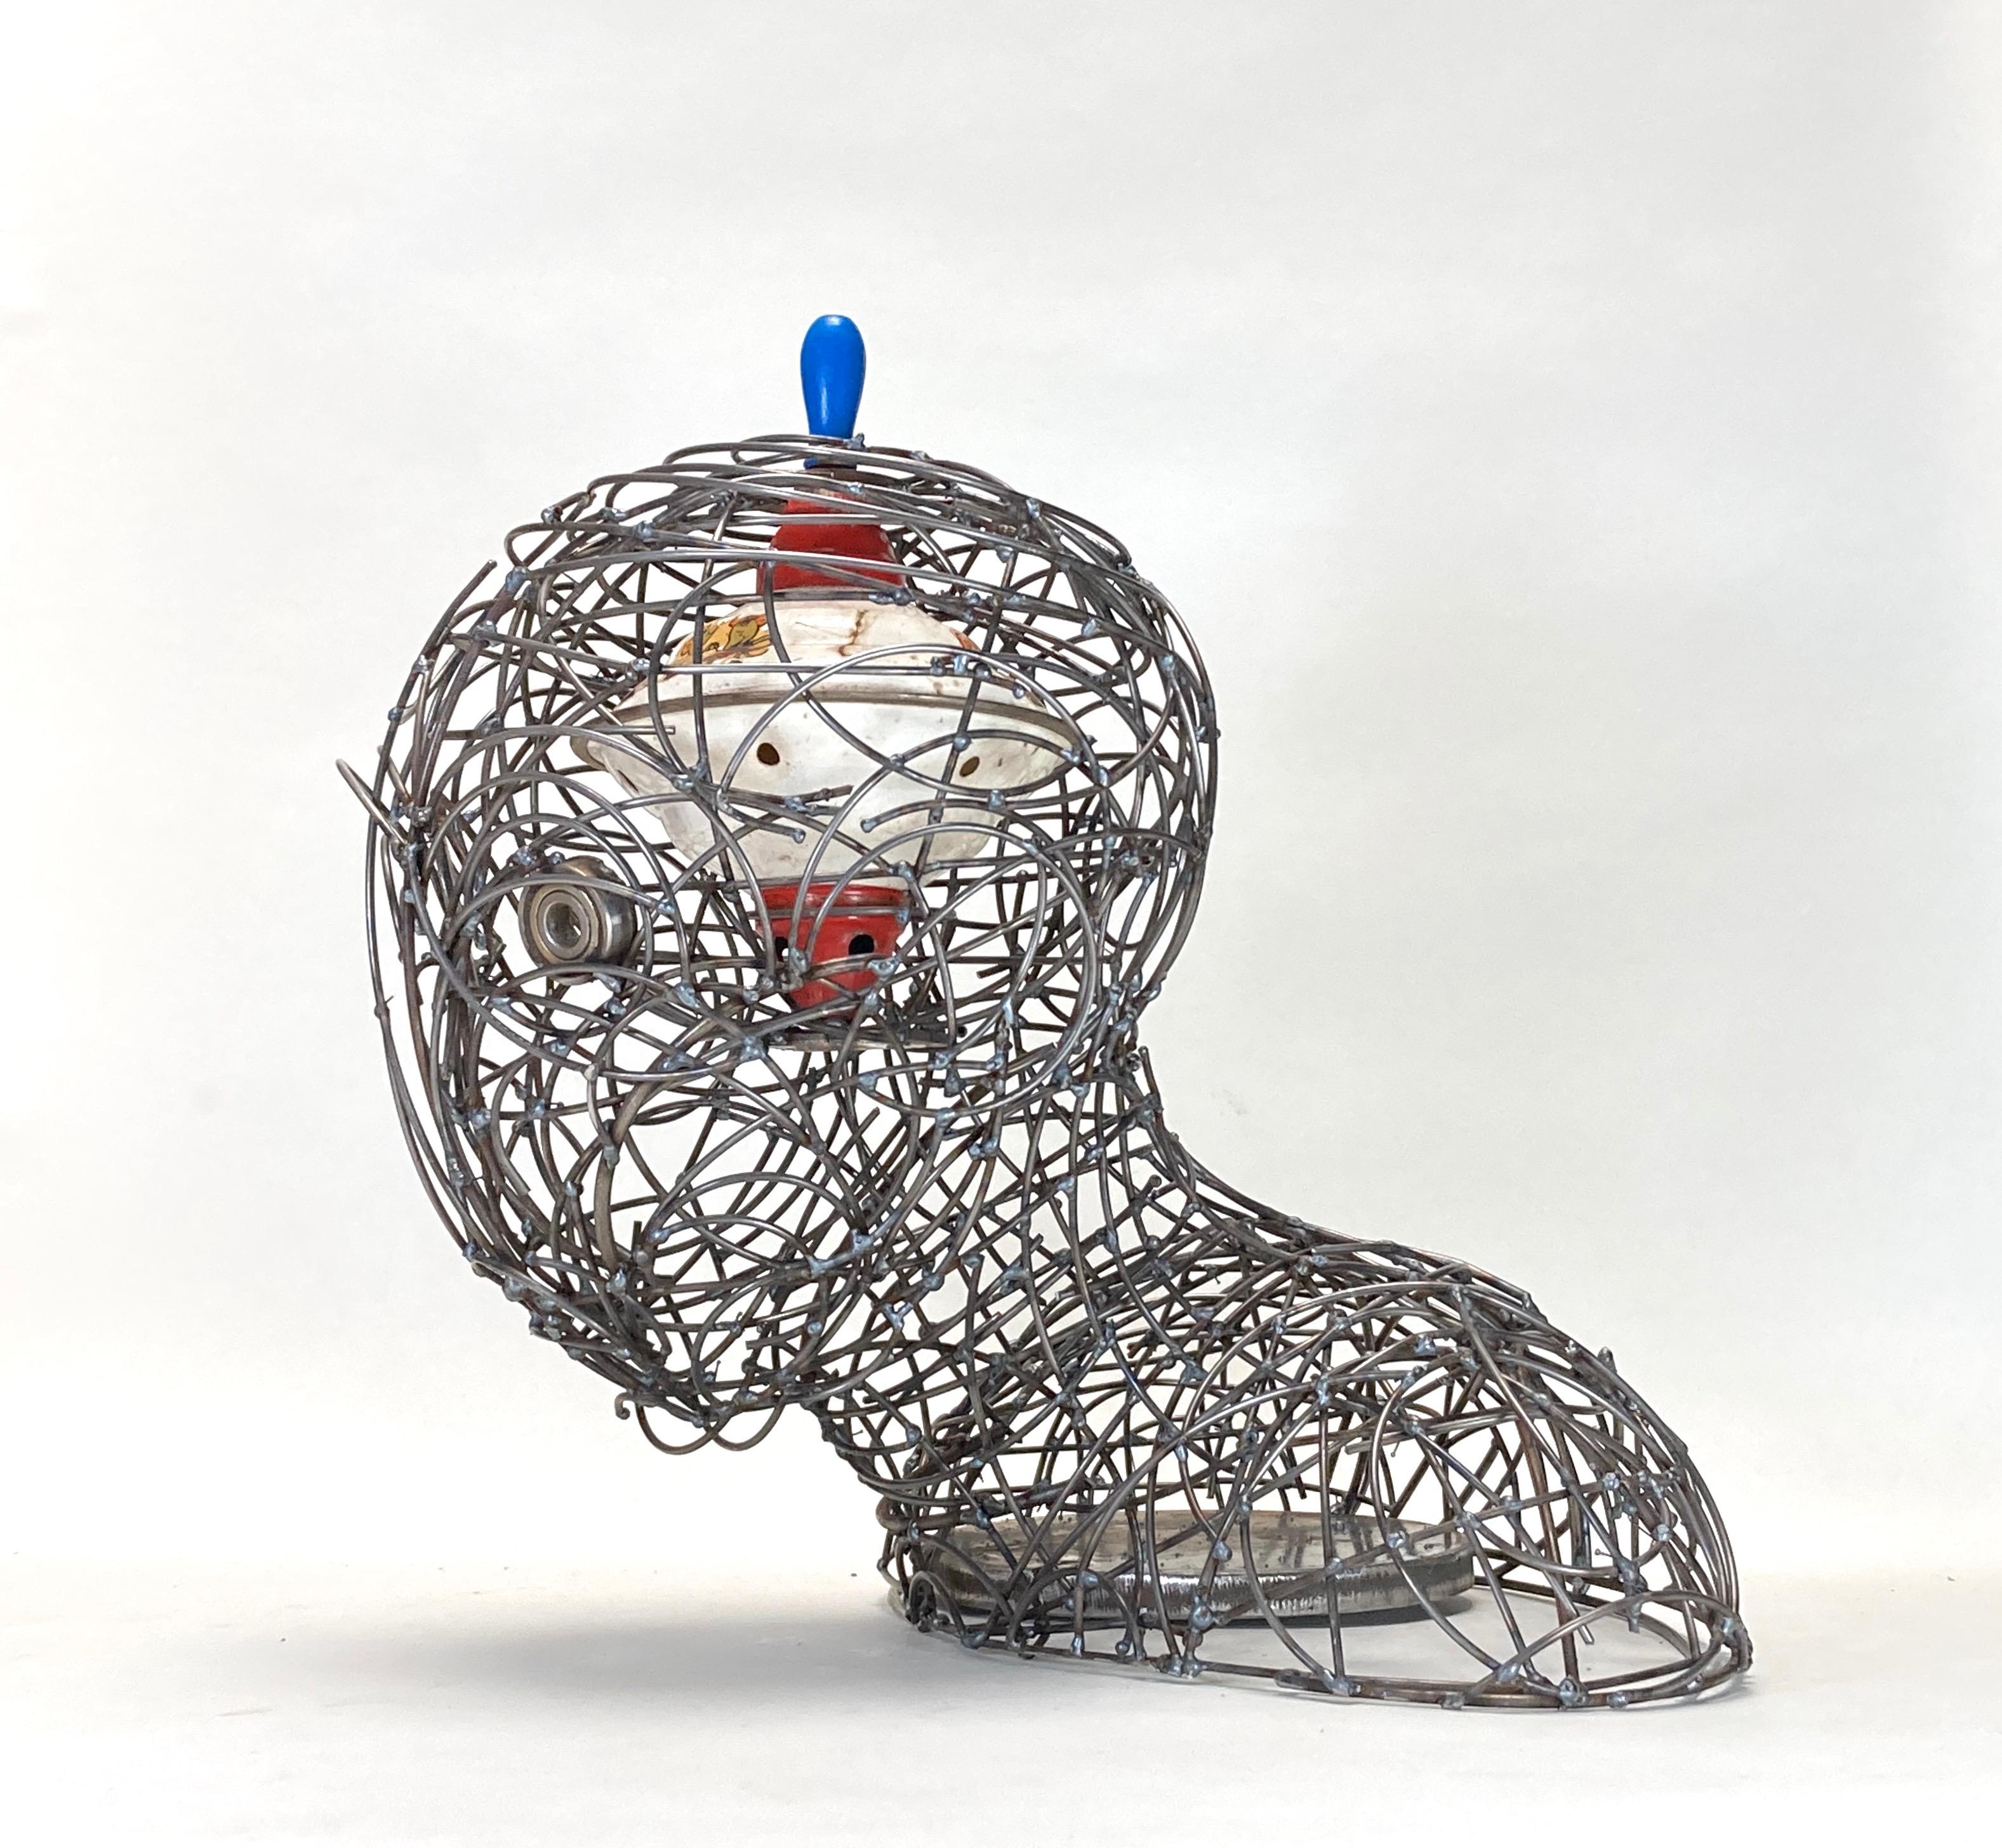 My Head is Spinning - Sculpture by Aaron Kramer